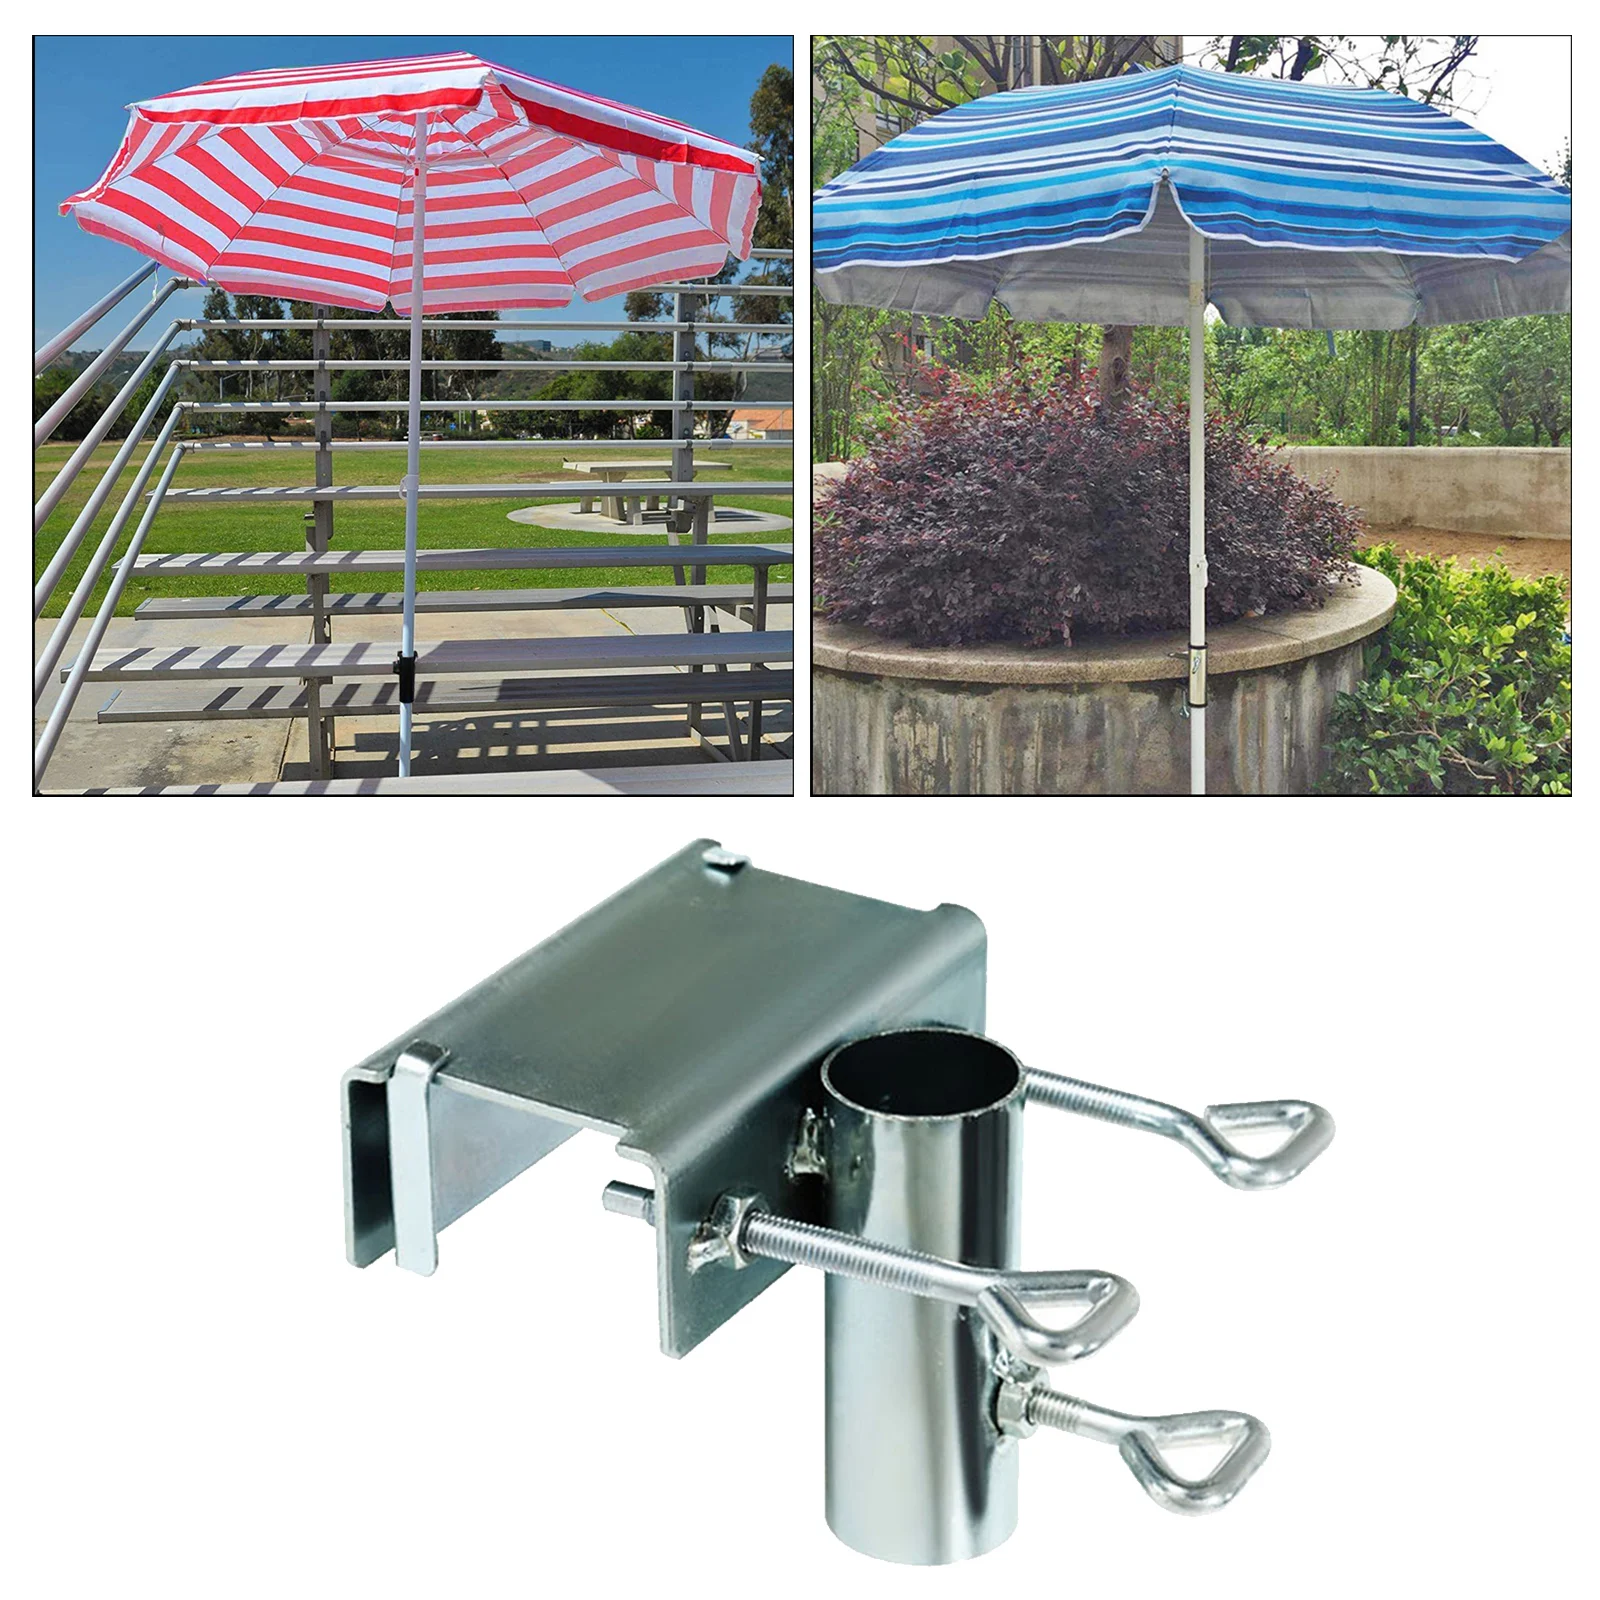 Heavy Duty Patio Umbrella Clamp Bench Deck Umbrella Stand Holder Clip Beach Fishing Umbrella Mount Clamp for Balcony Deck